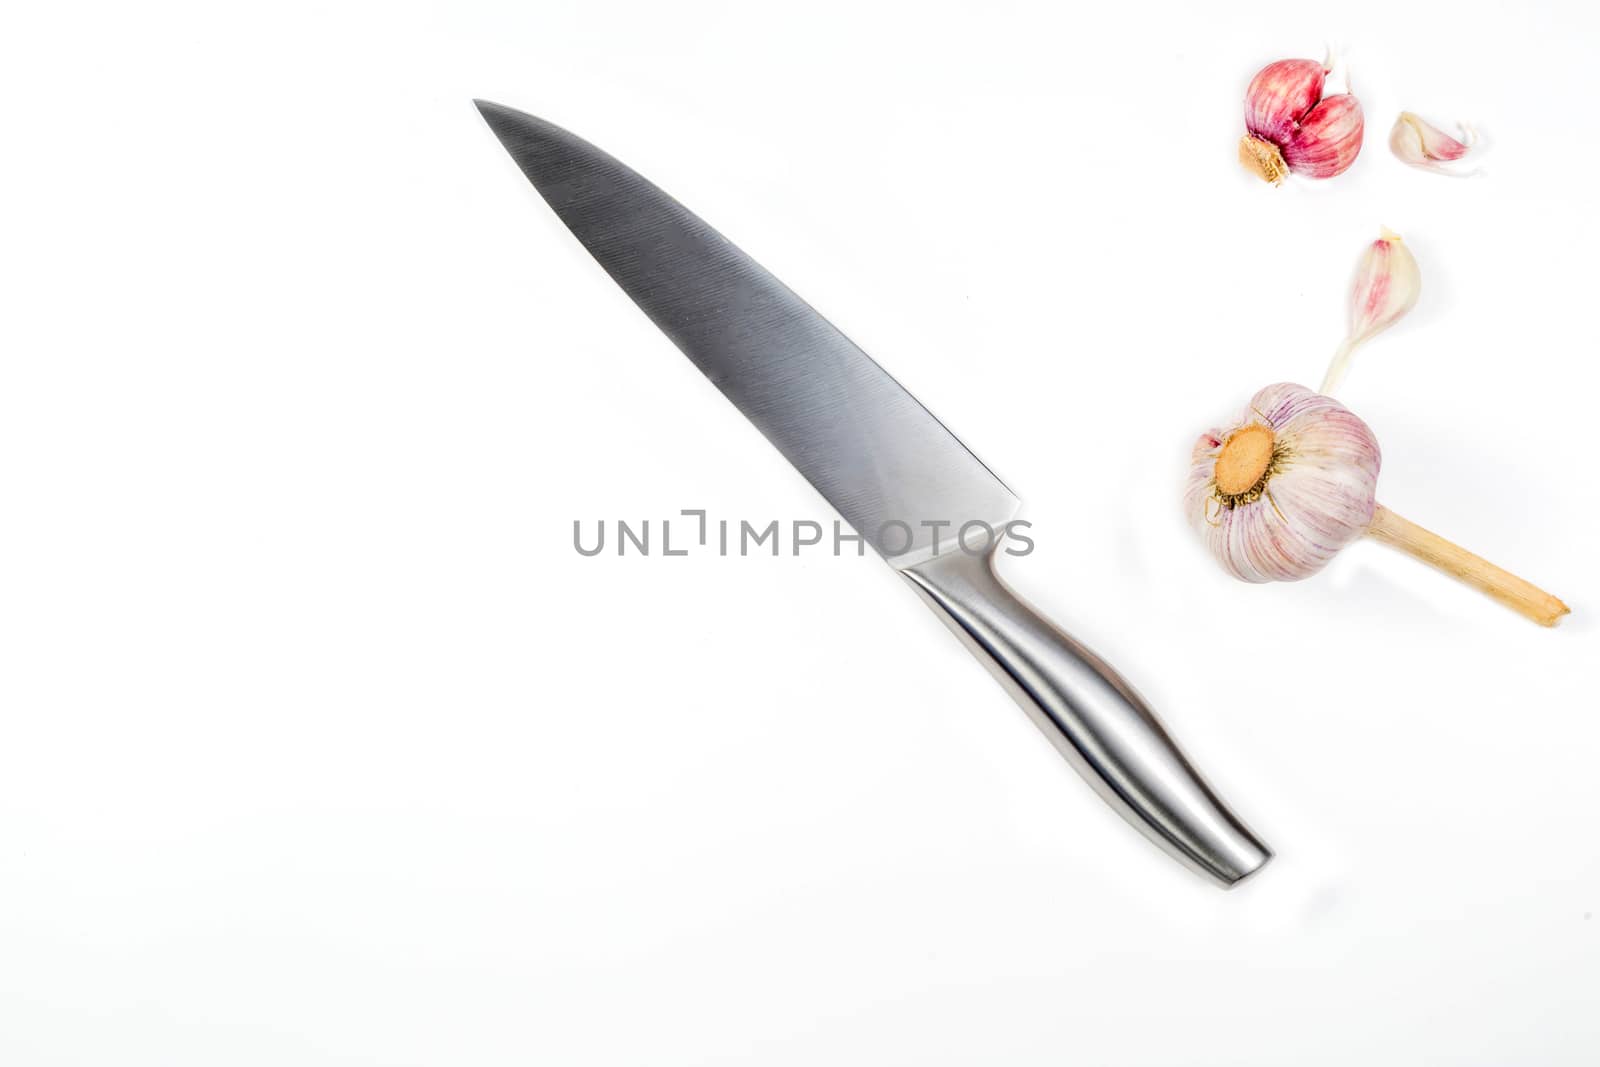 Closeup image of chief knife and garlic by galinasharapova